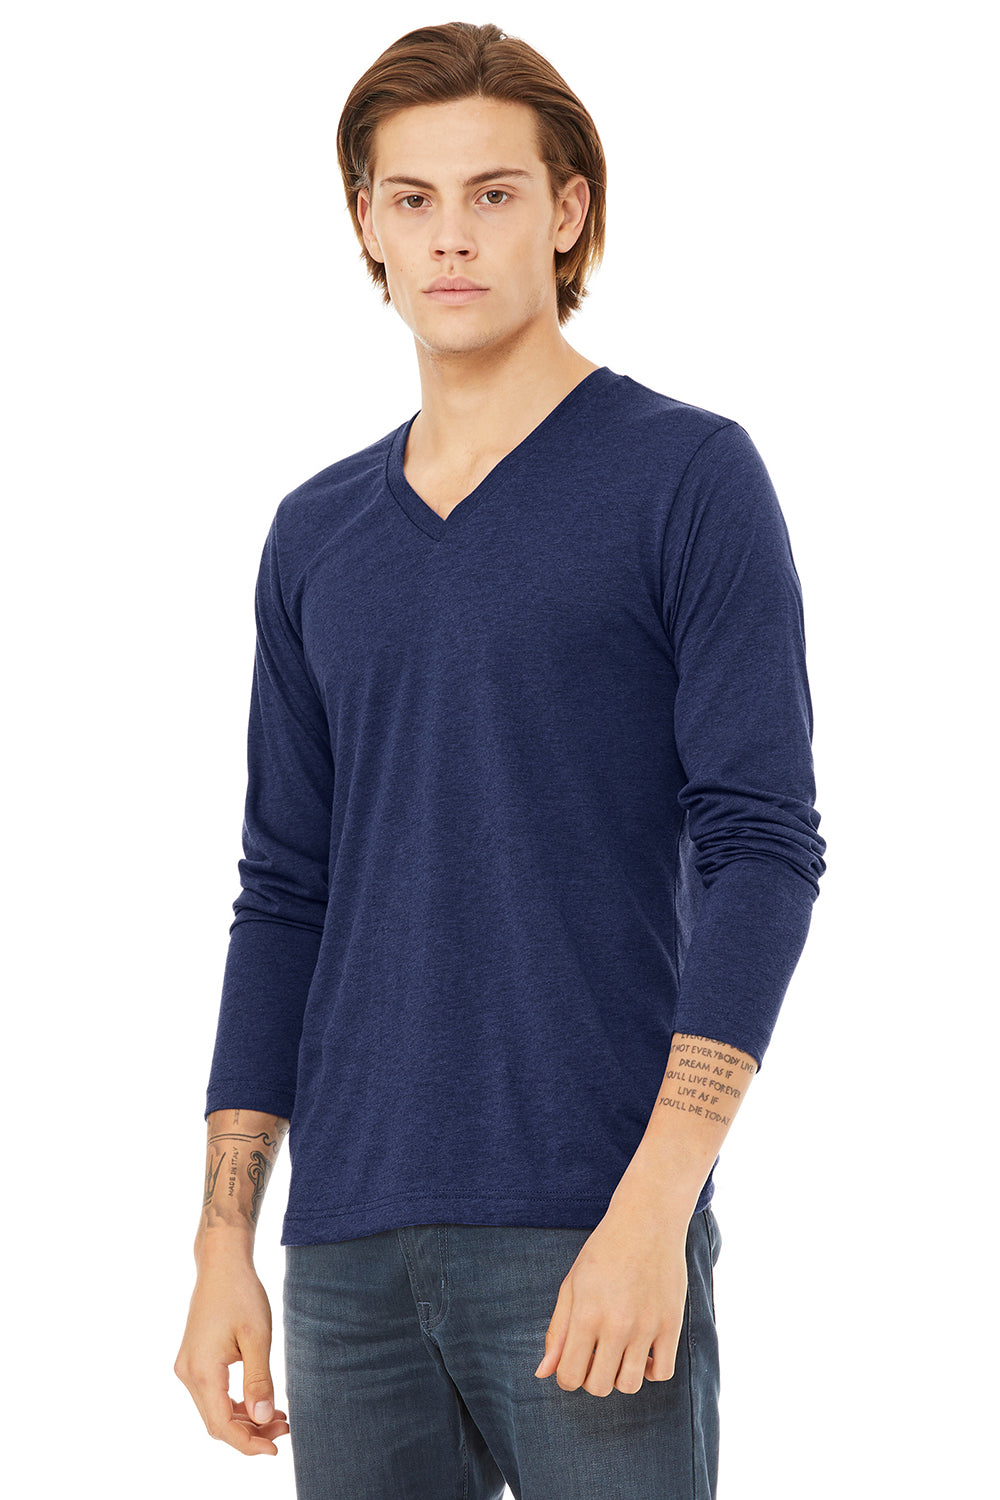 Bella + Canvas 3425 Mens Jersey Long Sleeve V-Neck T-Shirt Navy Blue Model 3Q